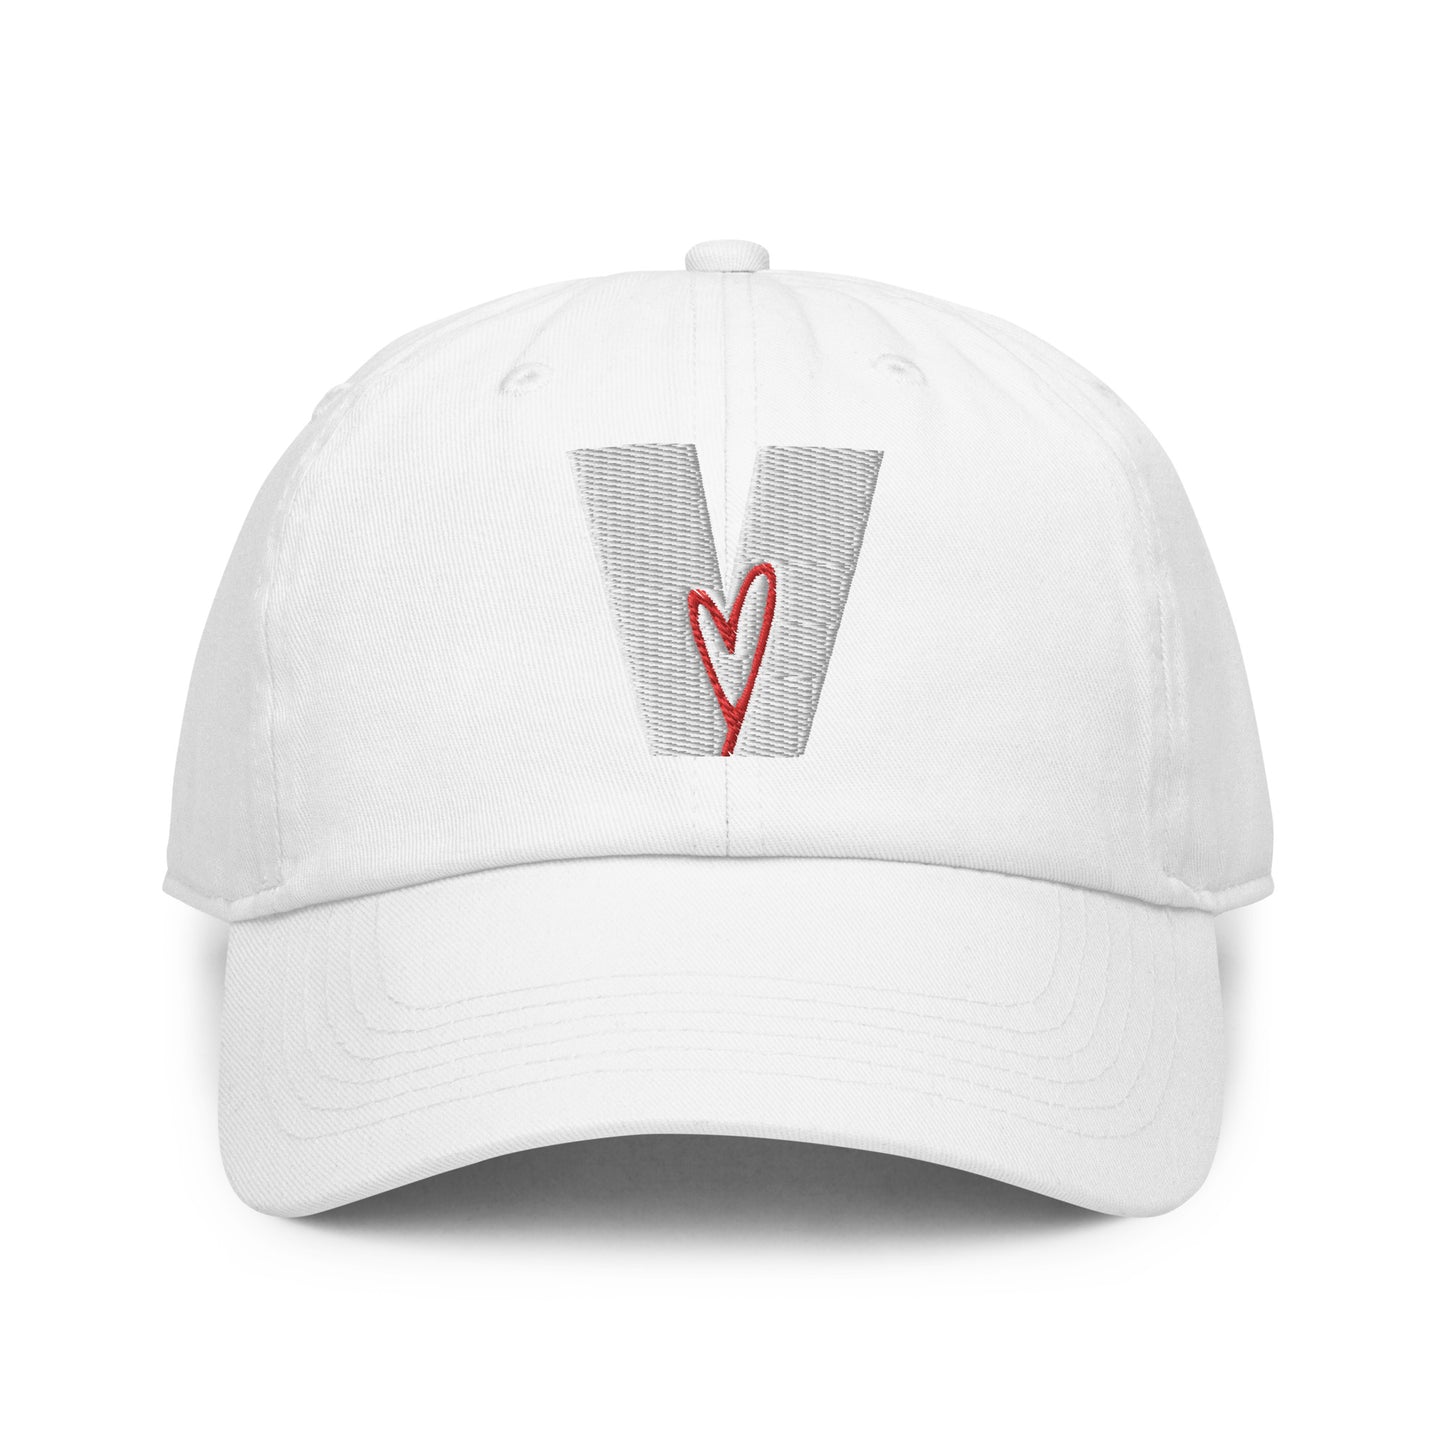 Voice Your Vibe "V" Adjustable Hat